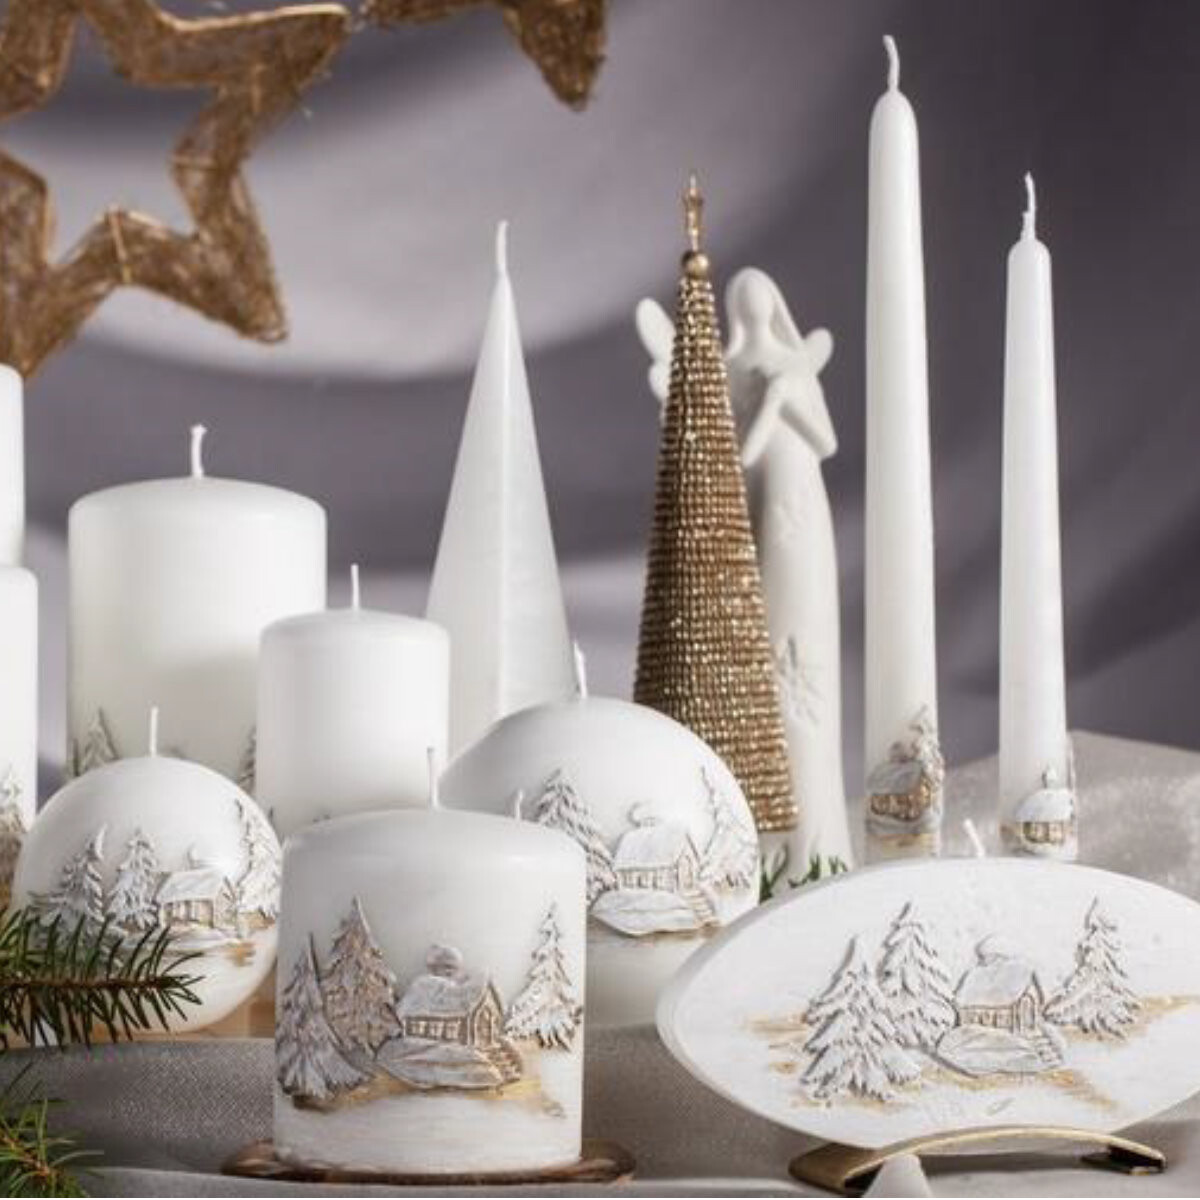 4 Stück € Handarbeit 3D S, Kerzen 25,39 Adventskranz Weihnachtskerzen Echtwachs